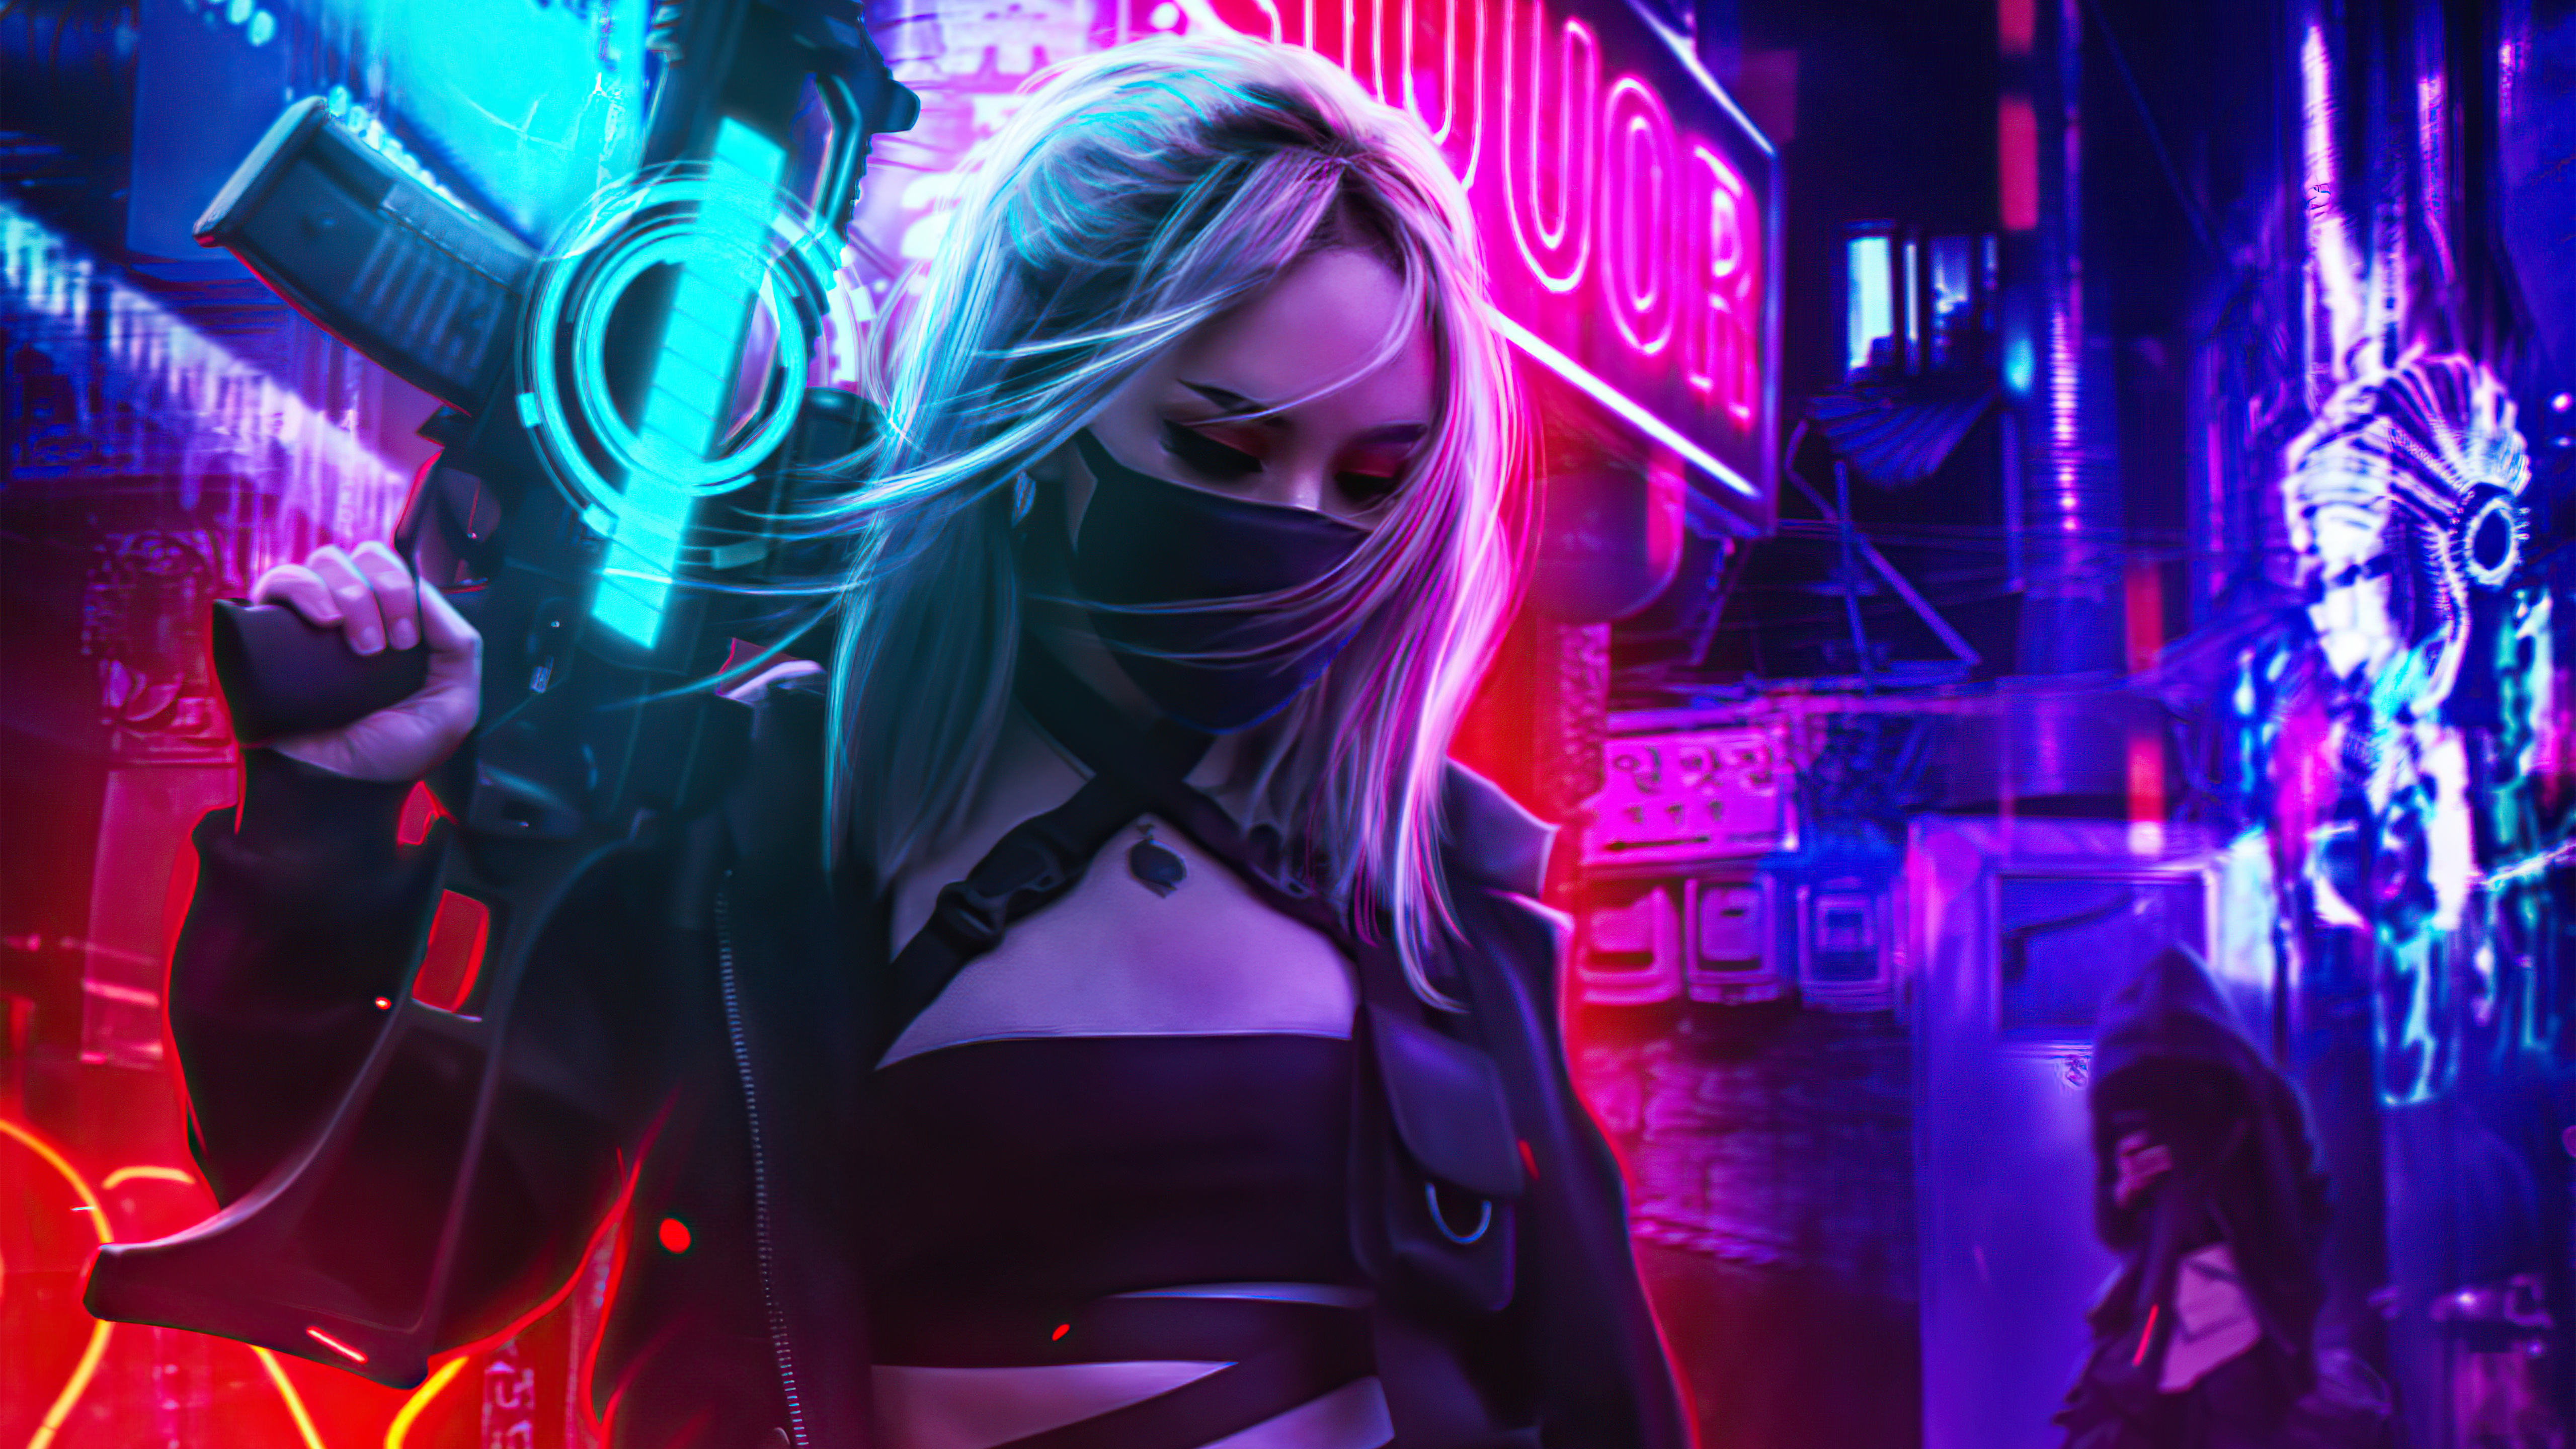 cyberpunk-girl-in-neon-mode-5k-56.jpg